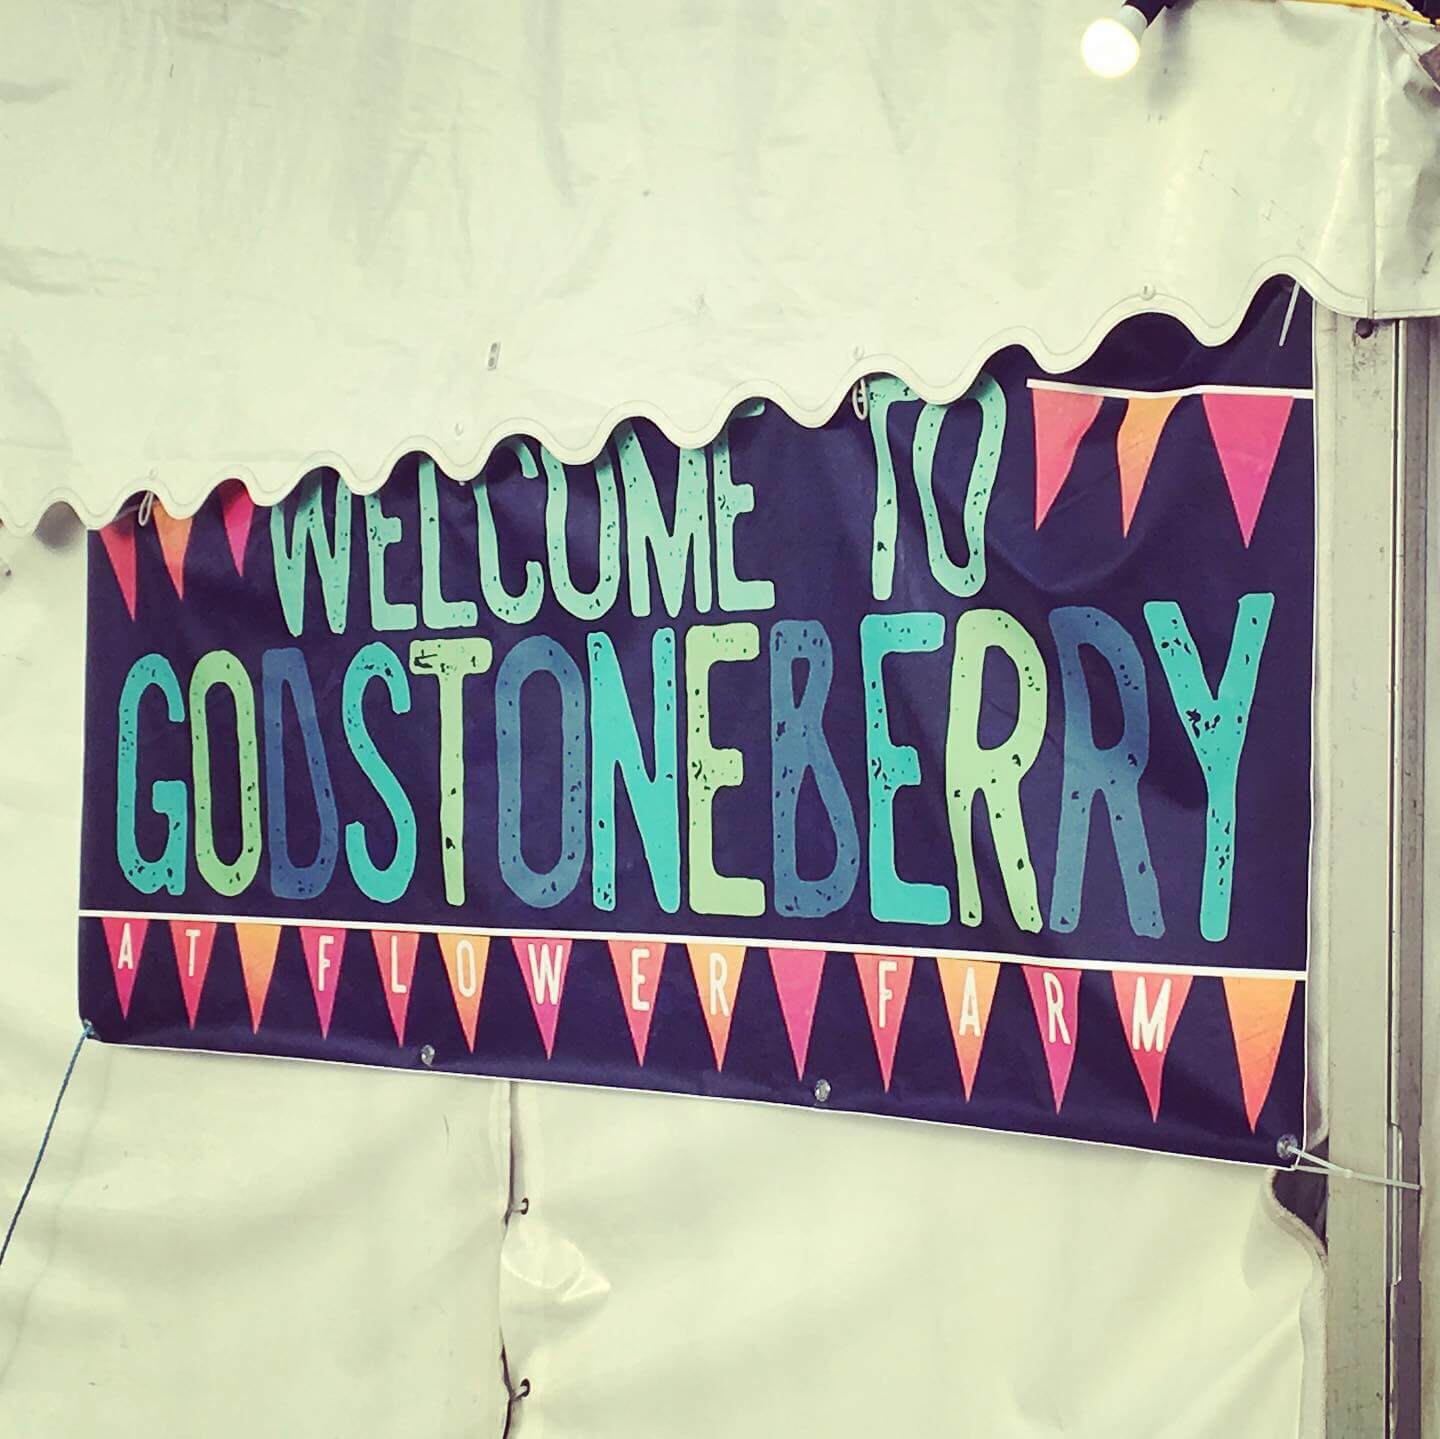 Godstoneberry Festival